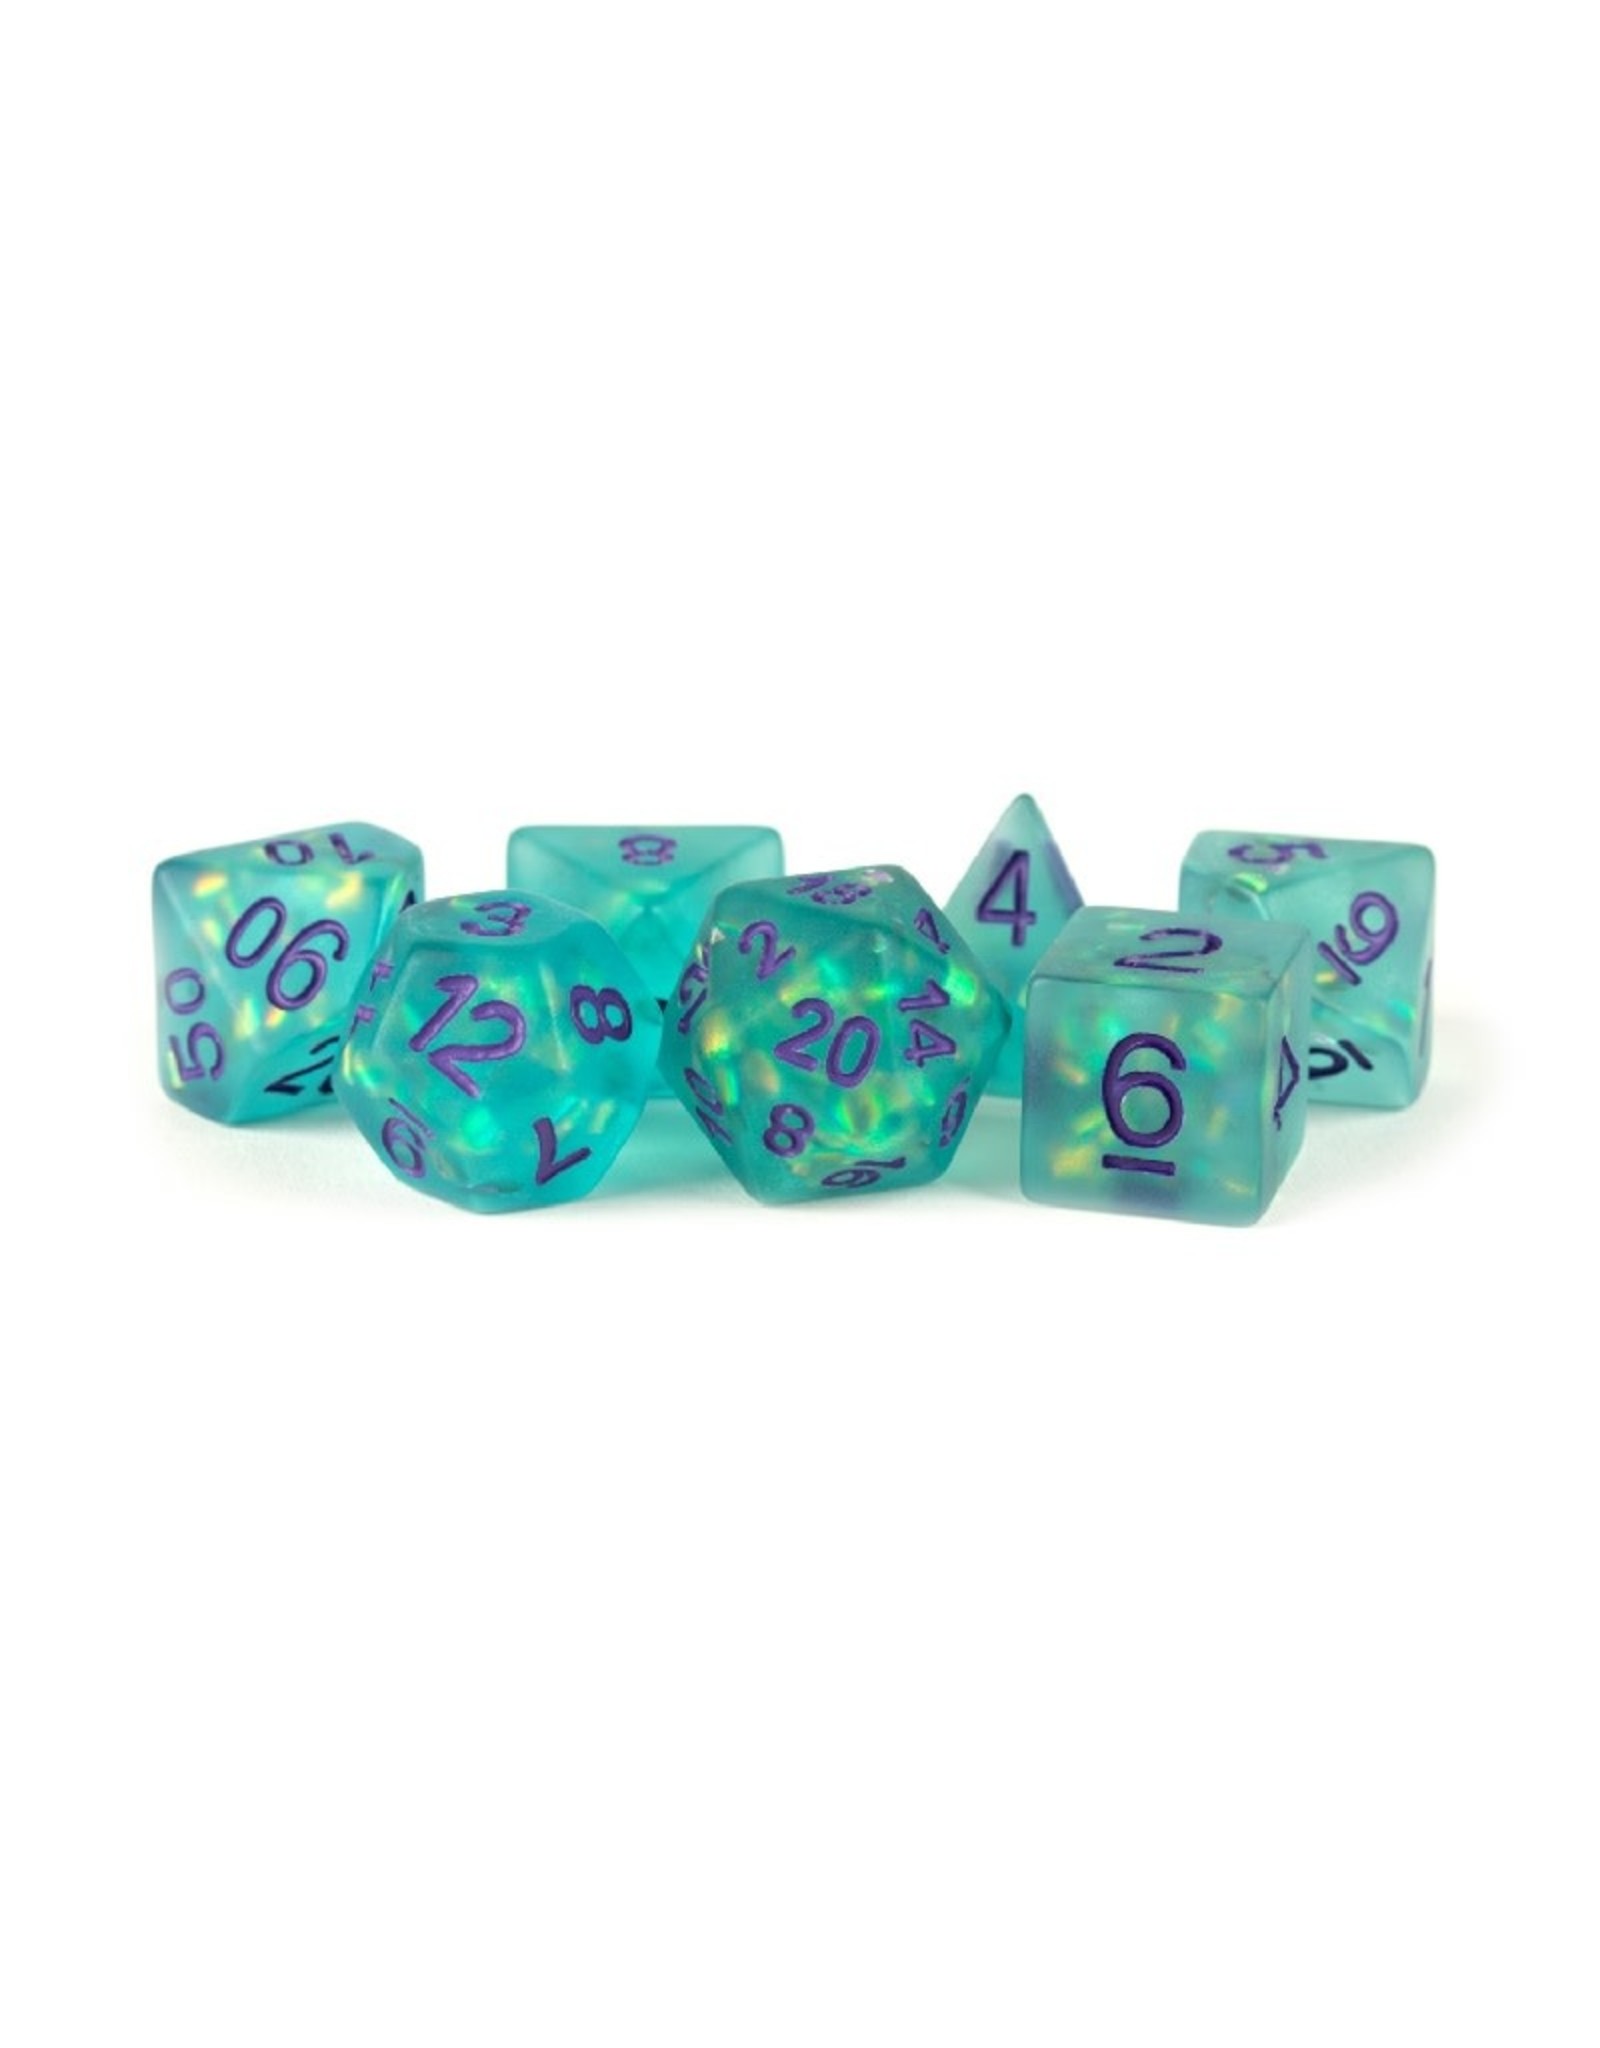 Polyhedral Dice Set: Icy Opal - Teal w/Purple